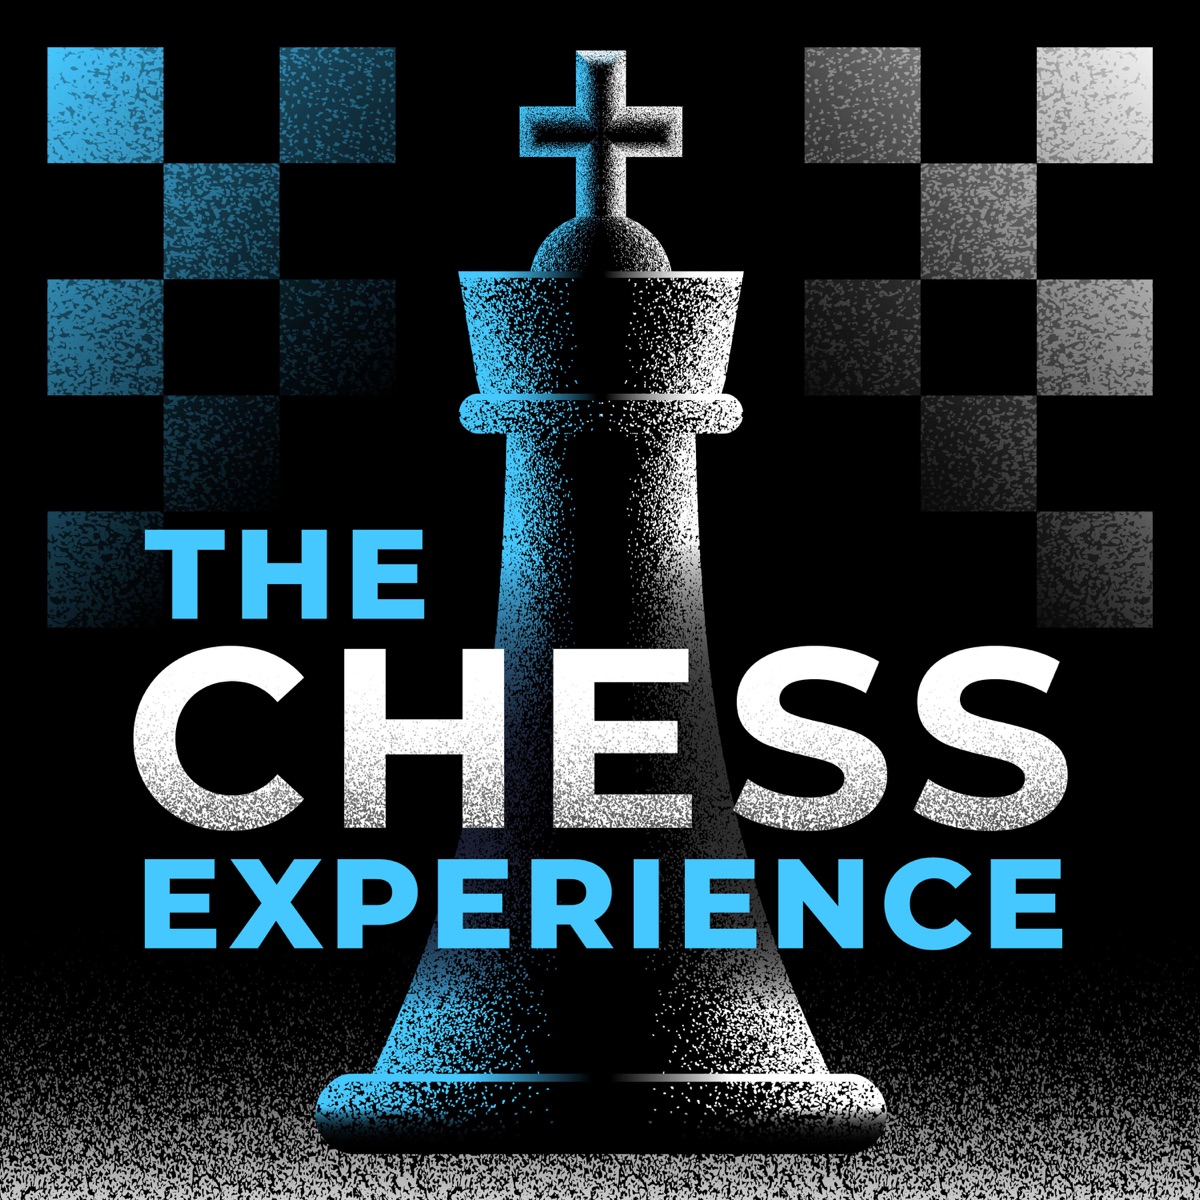 Anna Zatonskih plays multiple games of chess